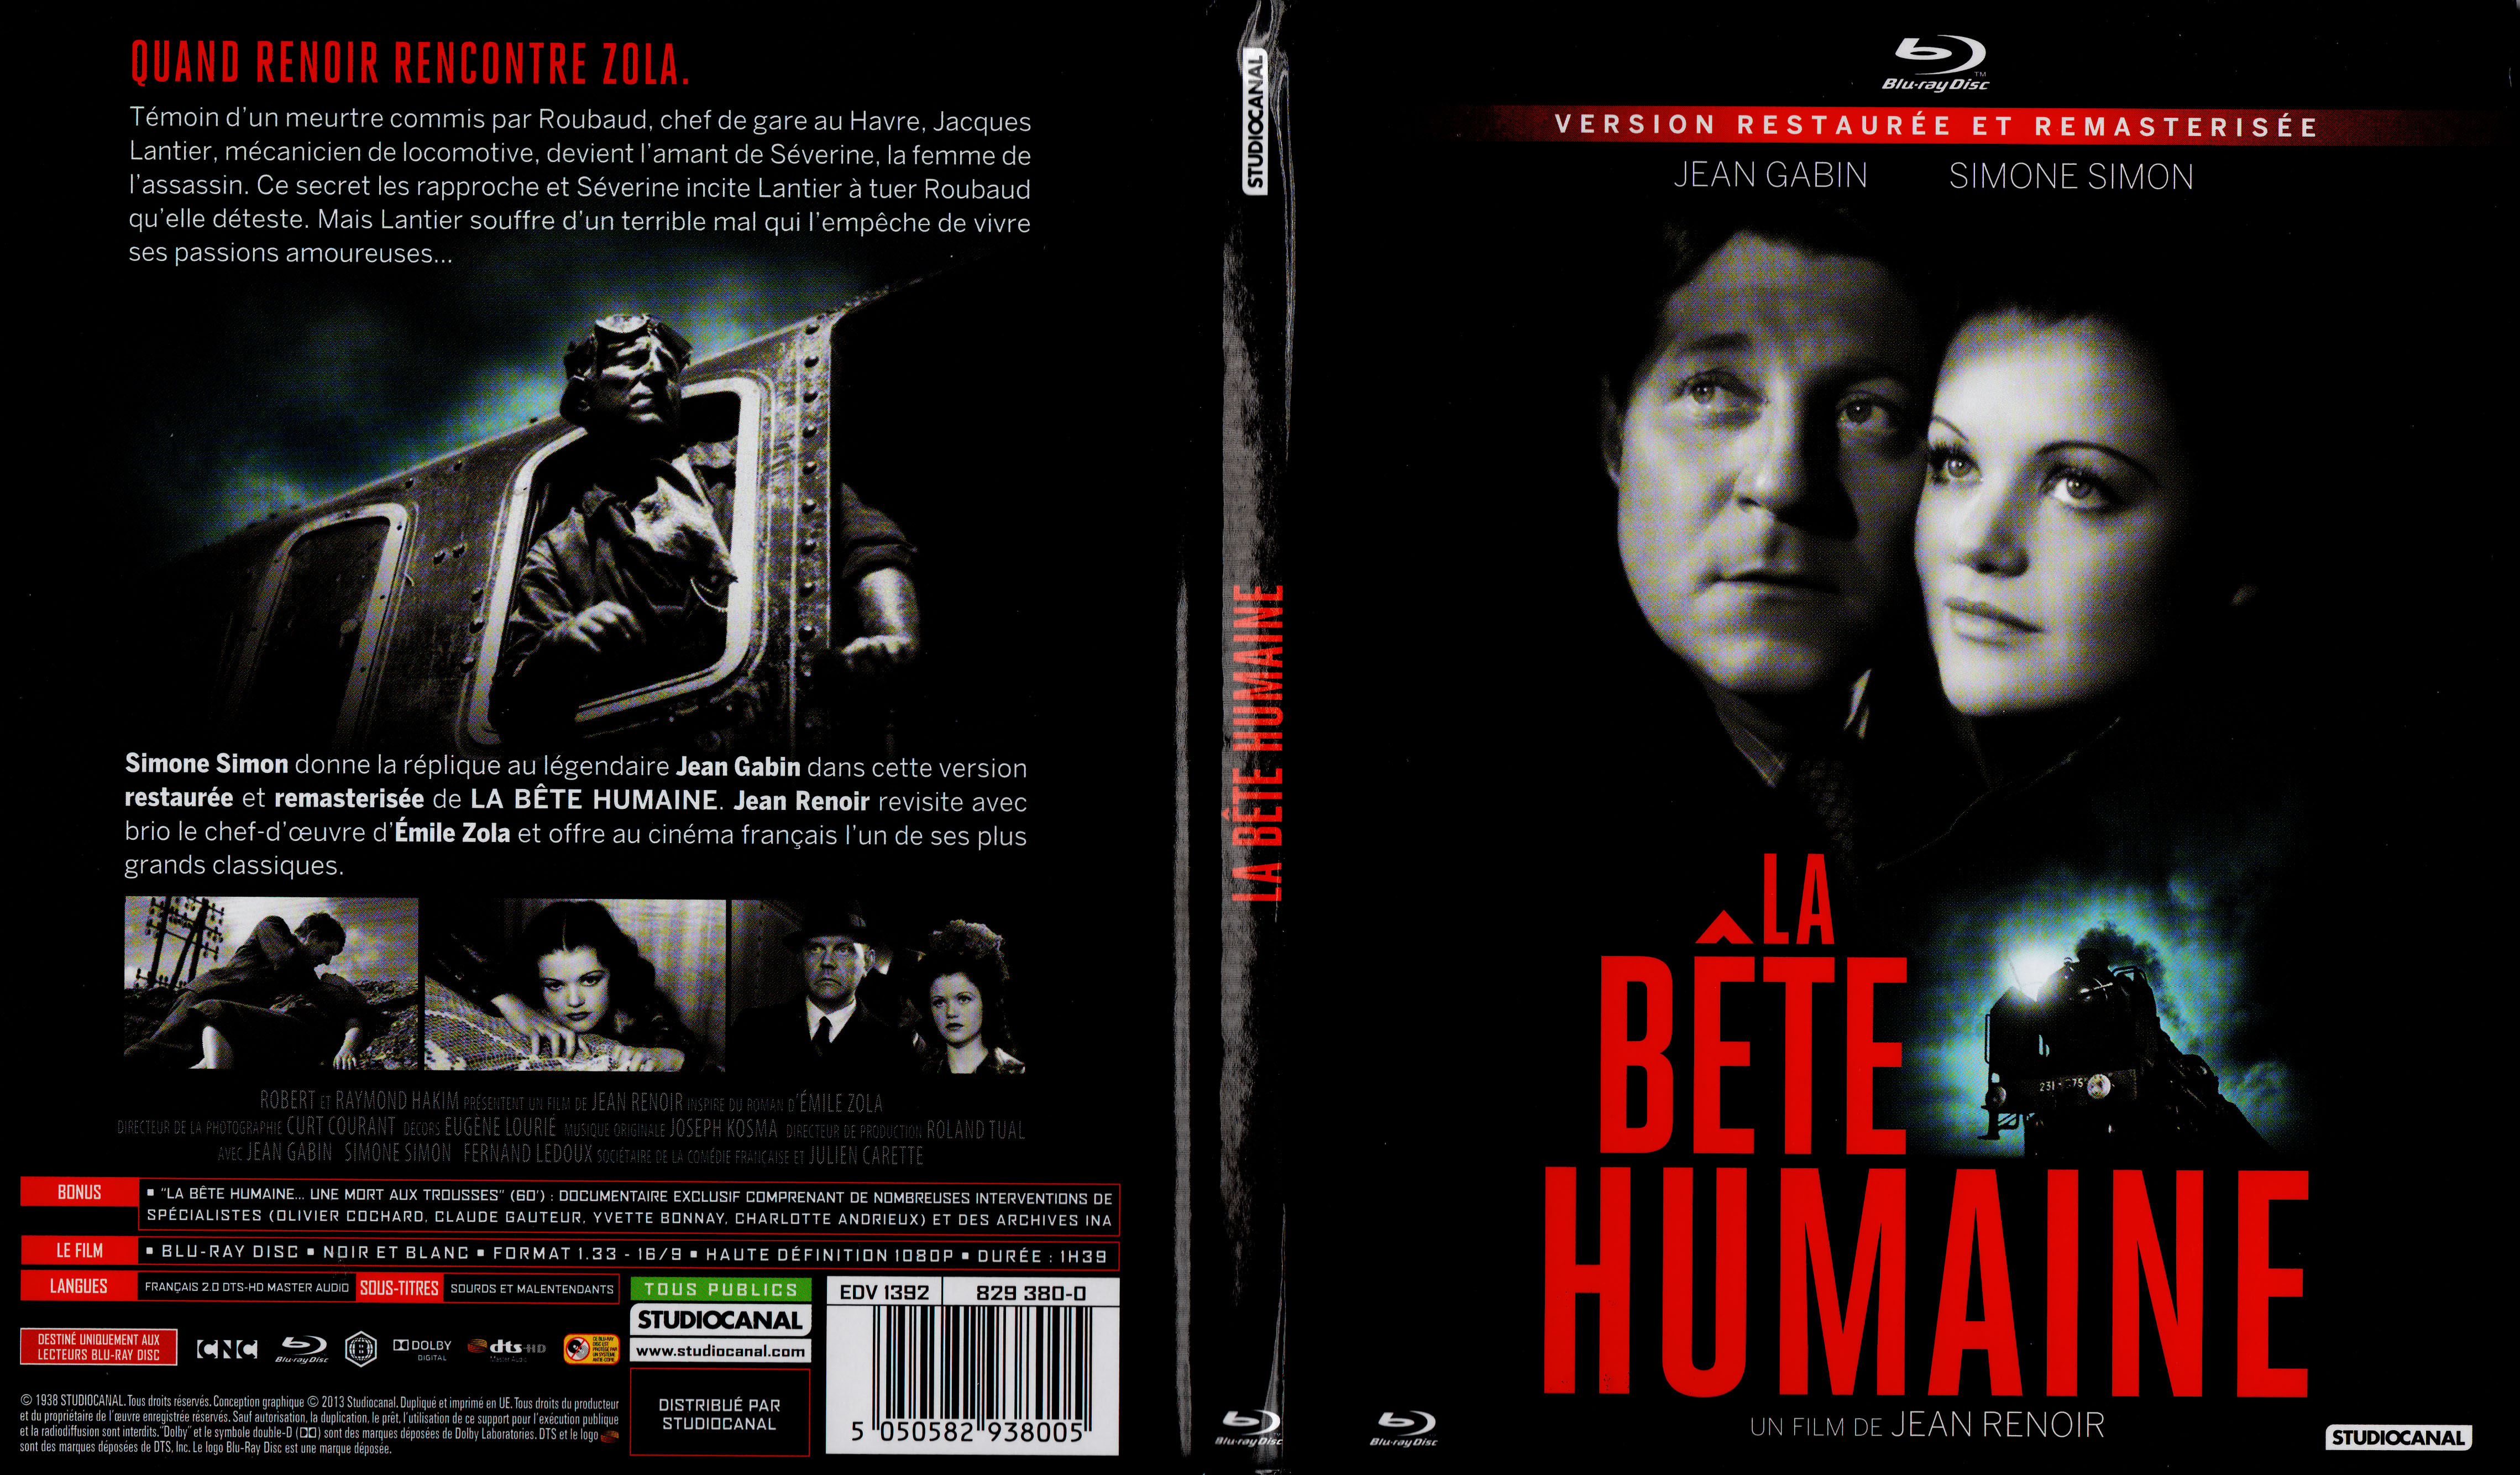 Jaquette DVD La bte humaine (BLU-RAY)